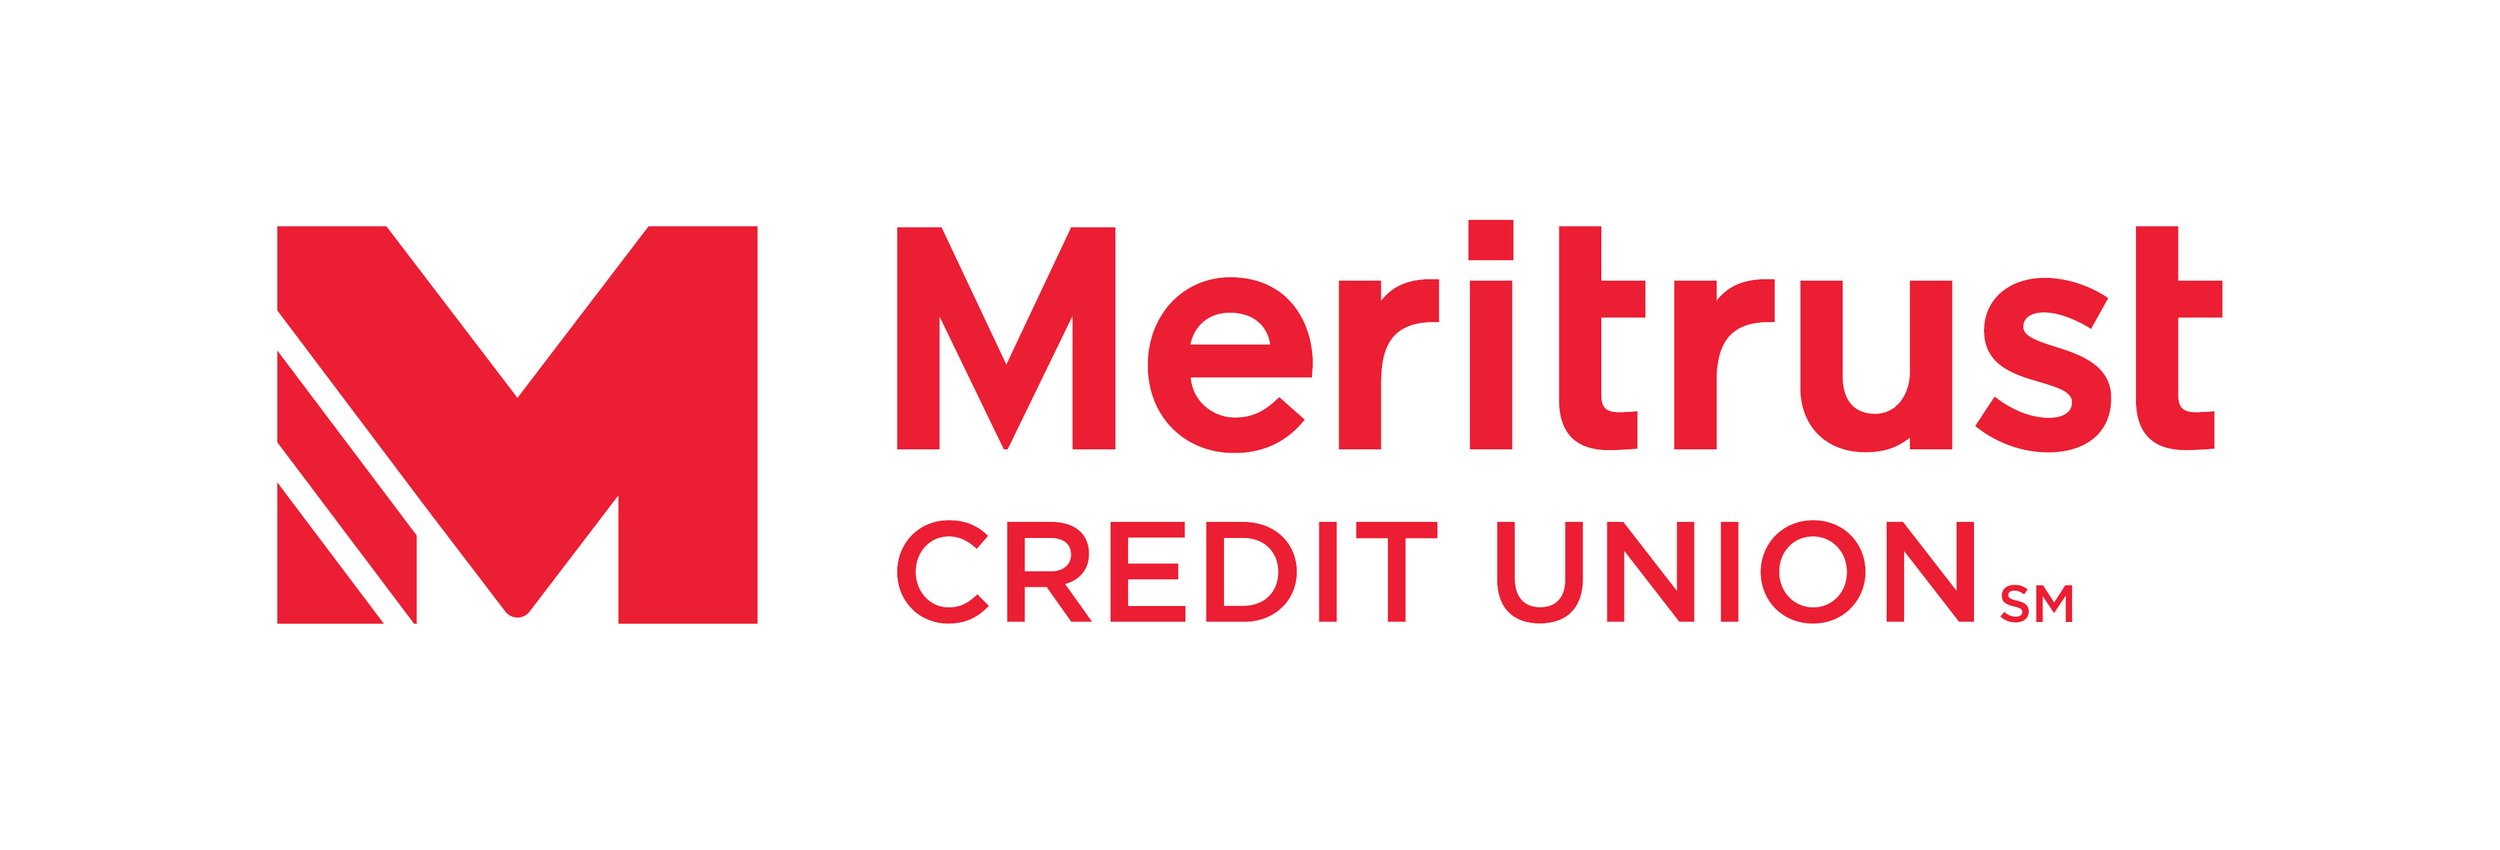 Meritrust Credit Union Logo - Web.jpg